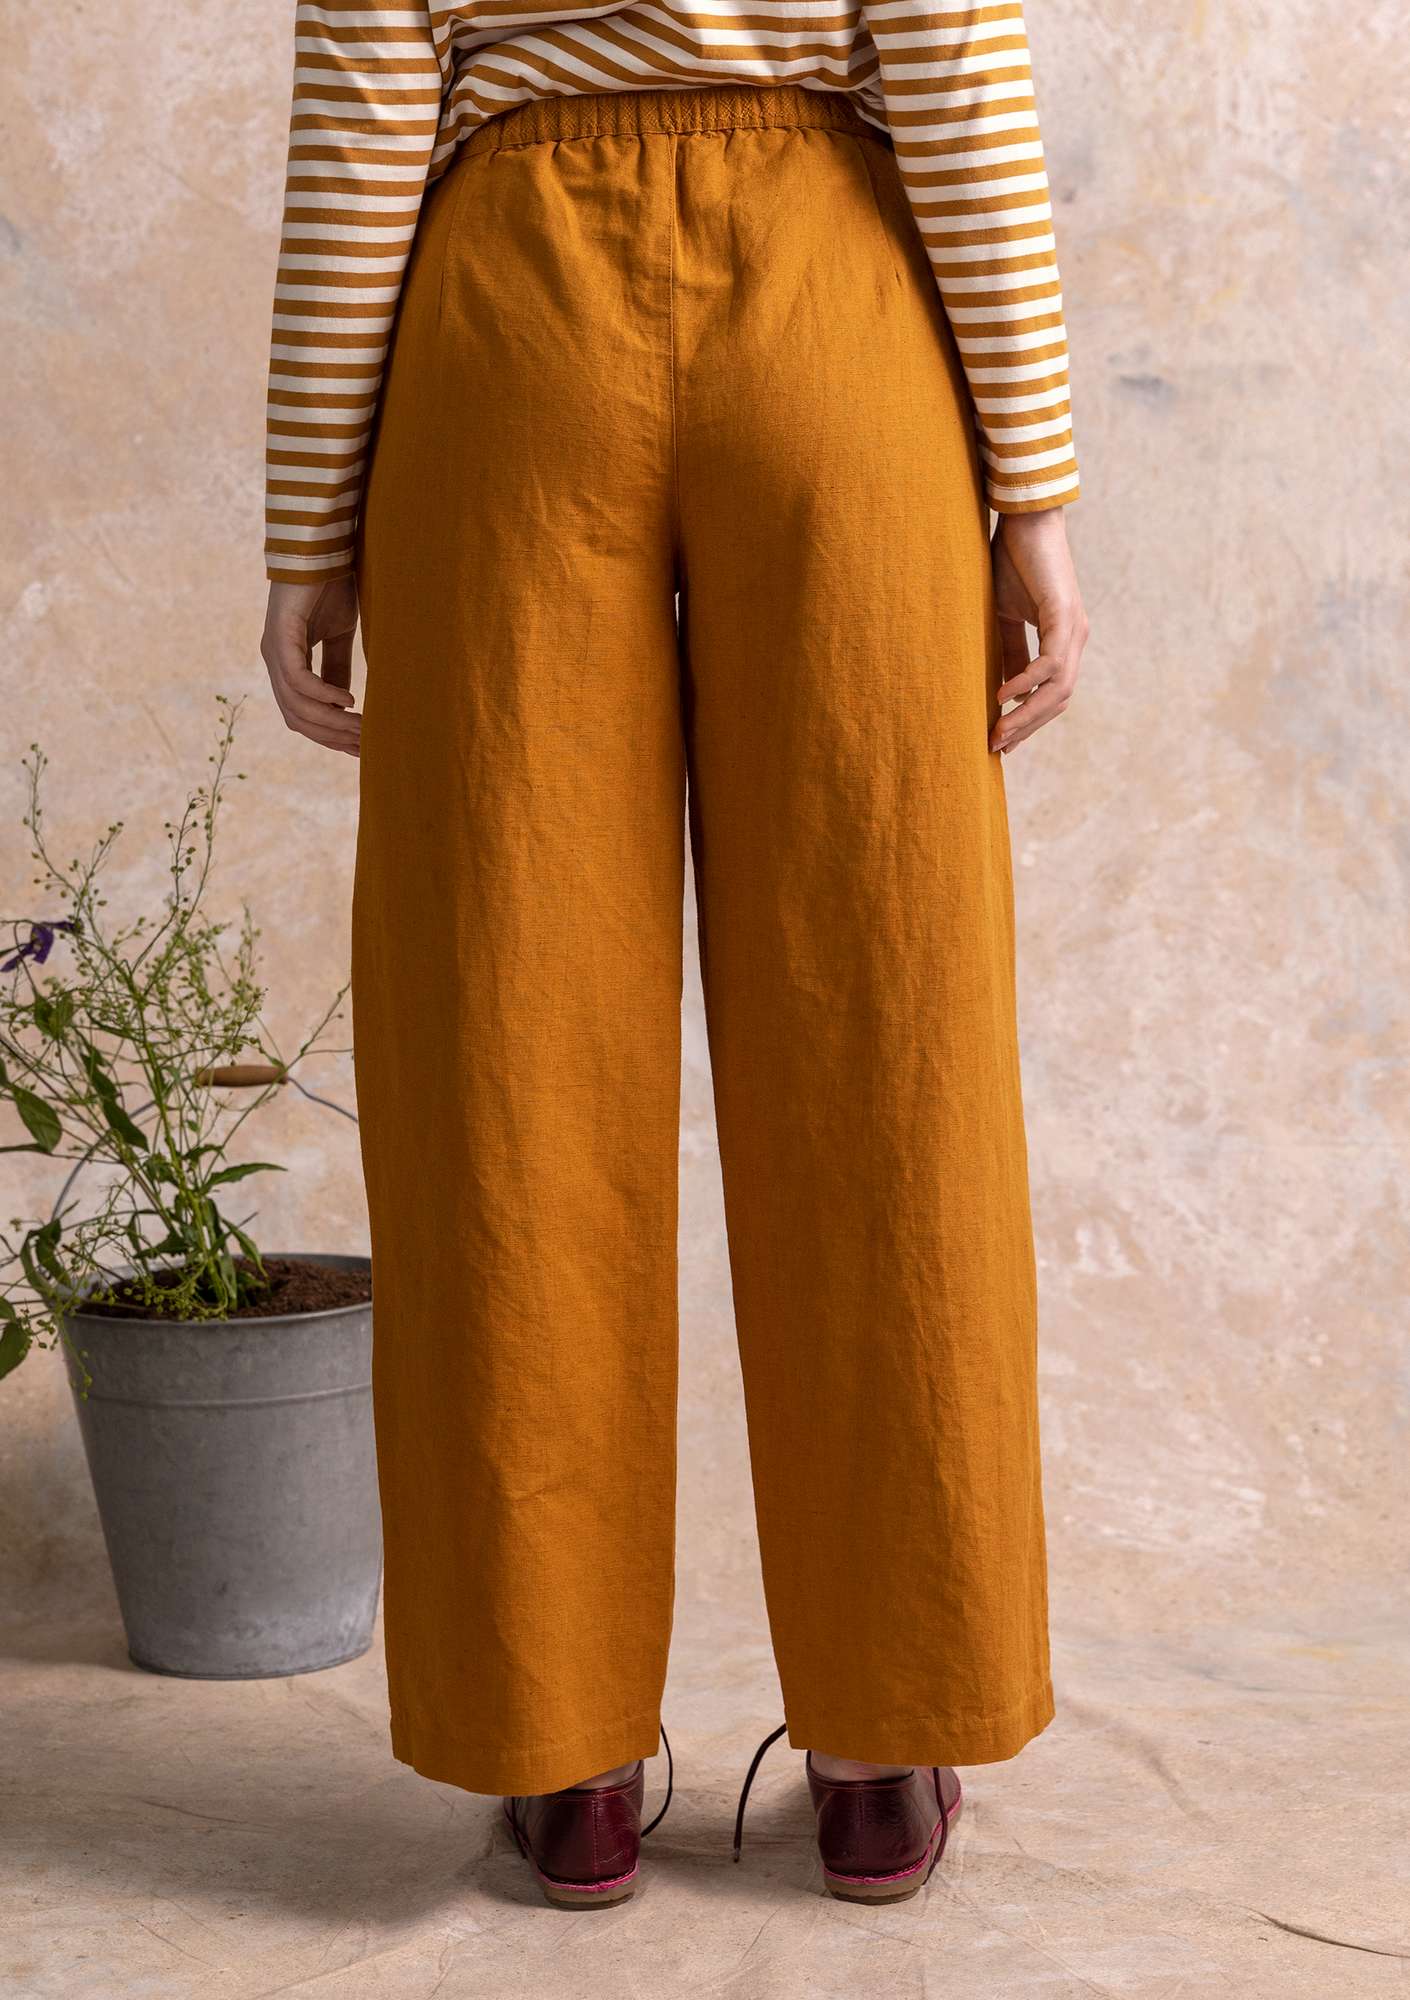 Pantalon en tissu de coton/lin mustard